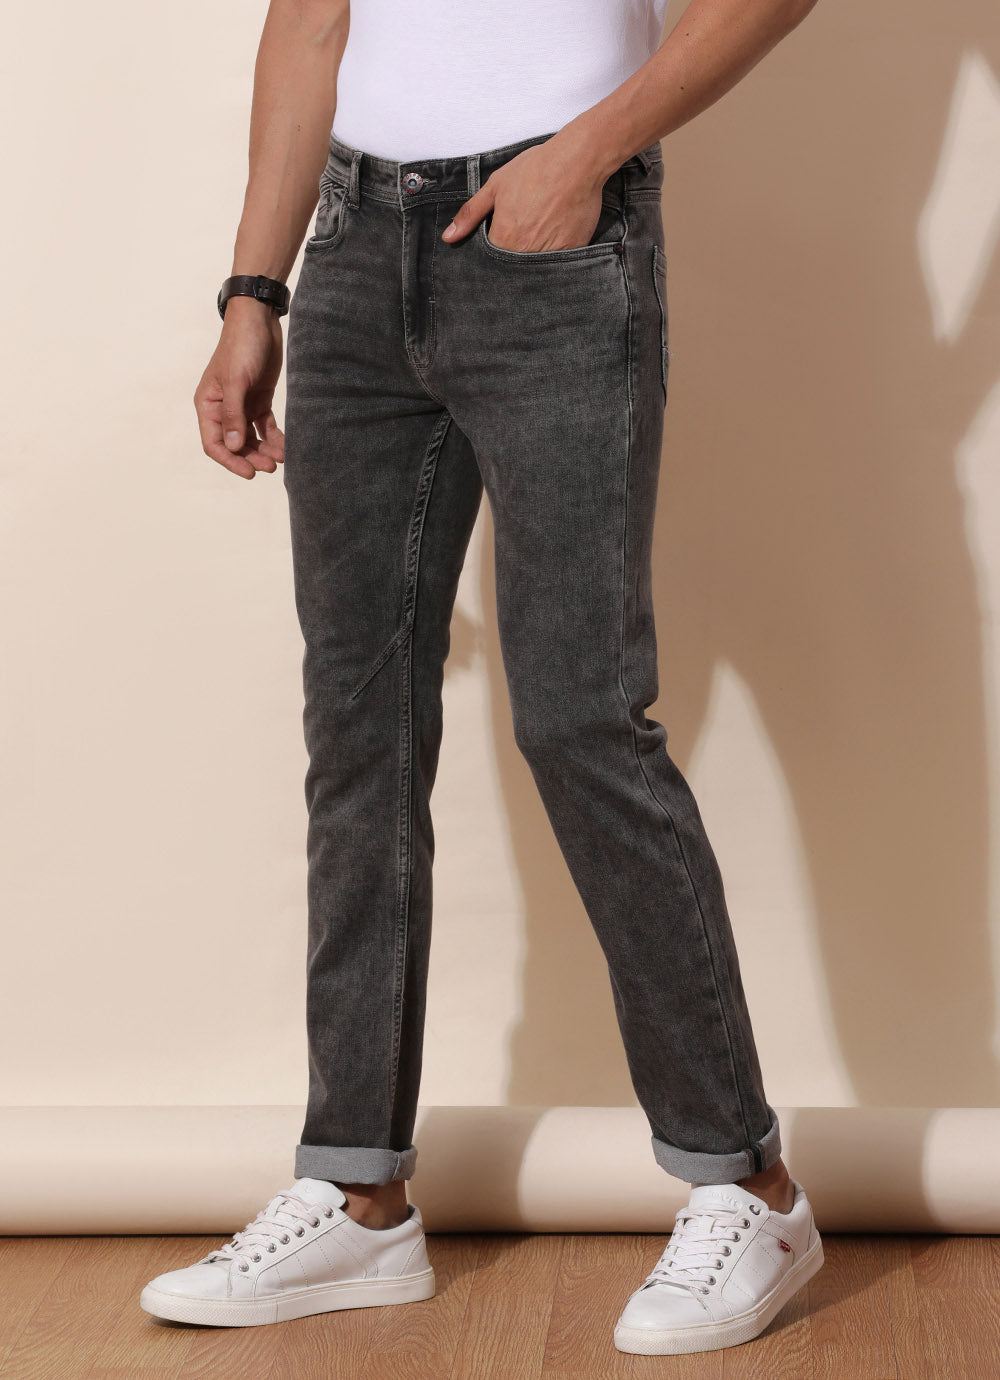 Dark Grey Jeans with Regular Pockets made of Twill Denim